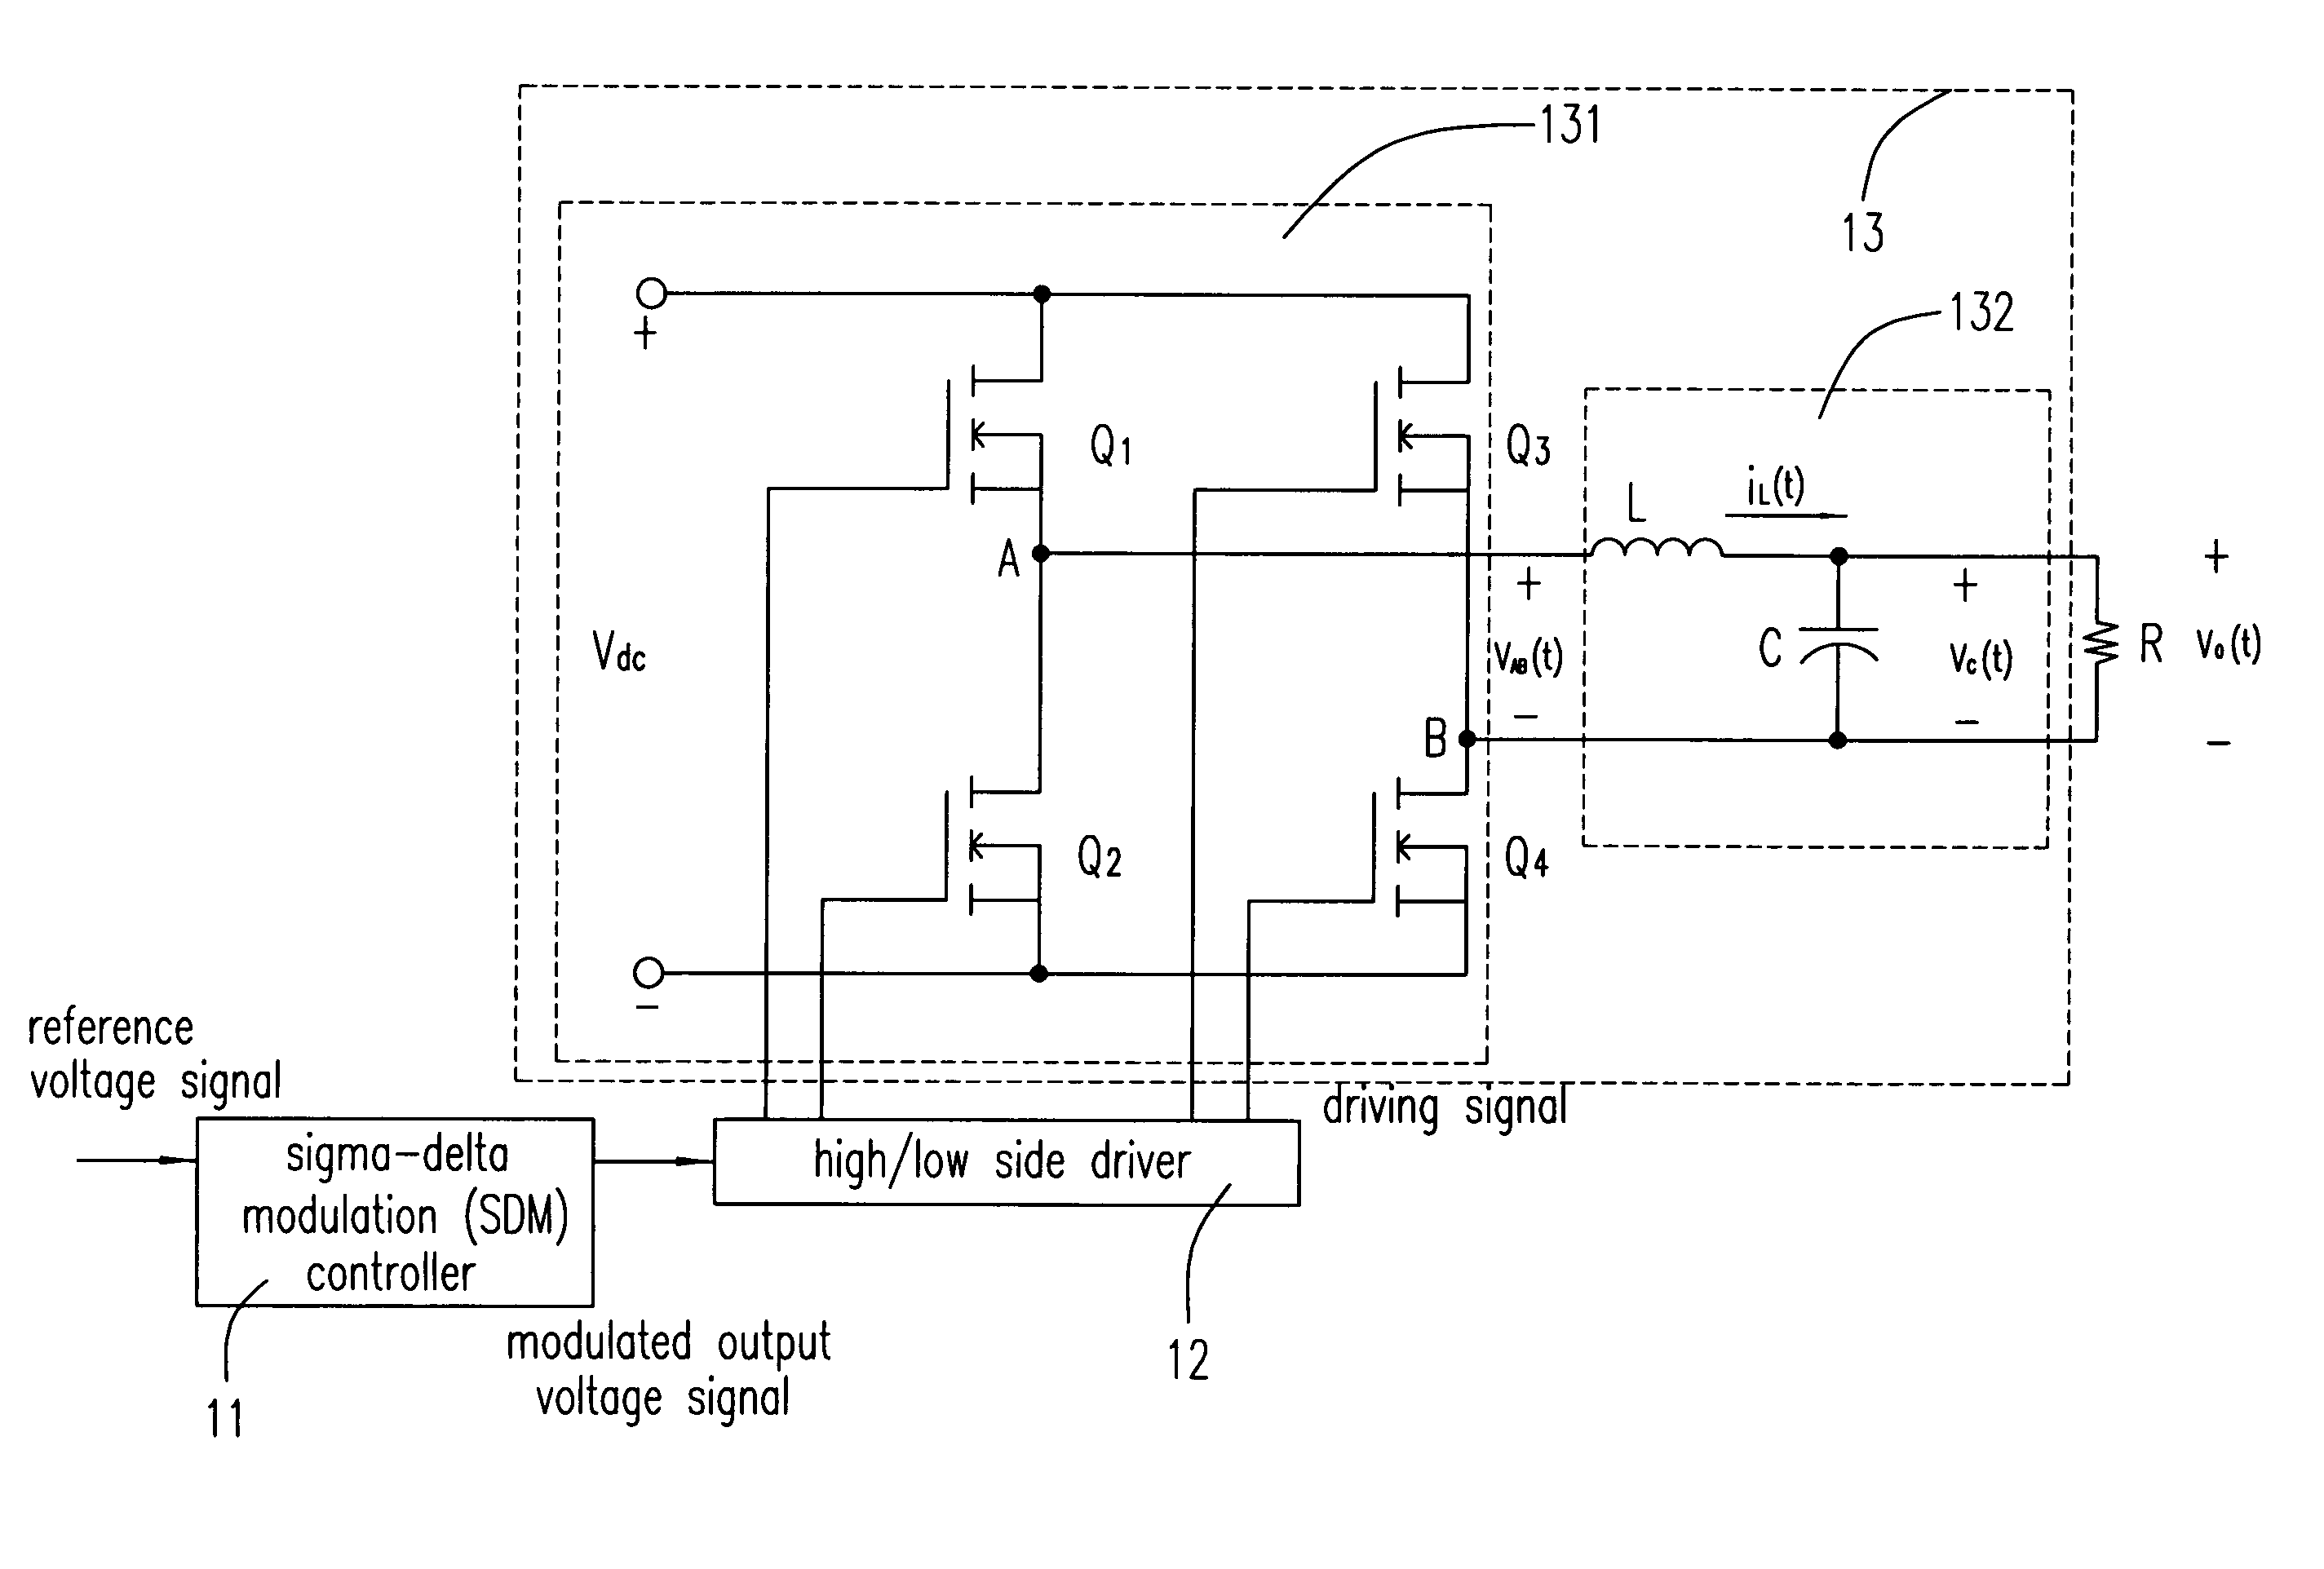 Sigma-delta modulation inverter with programmable waveform output